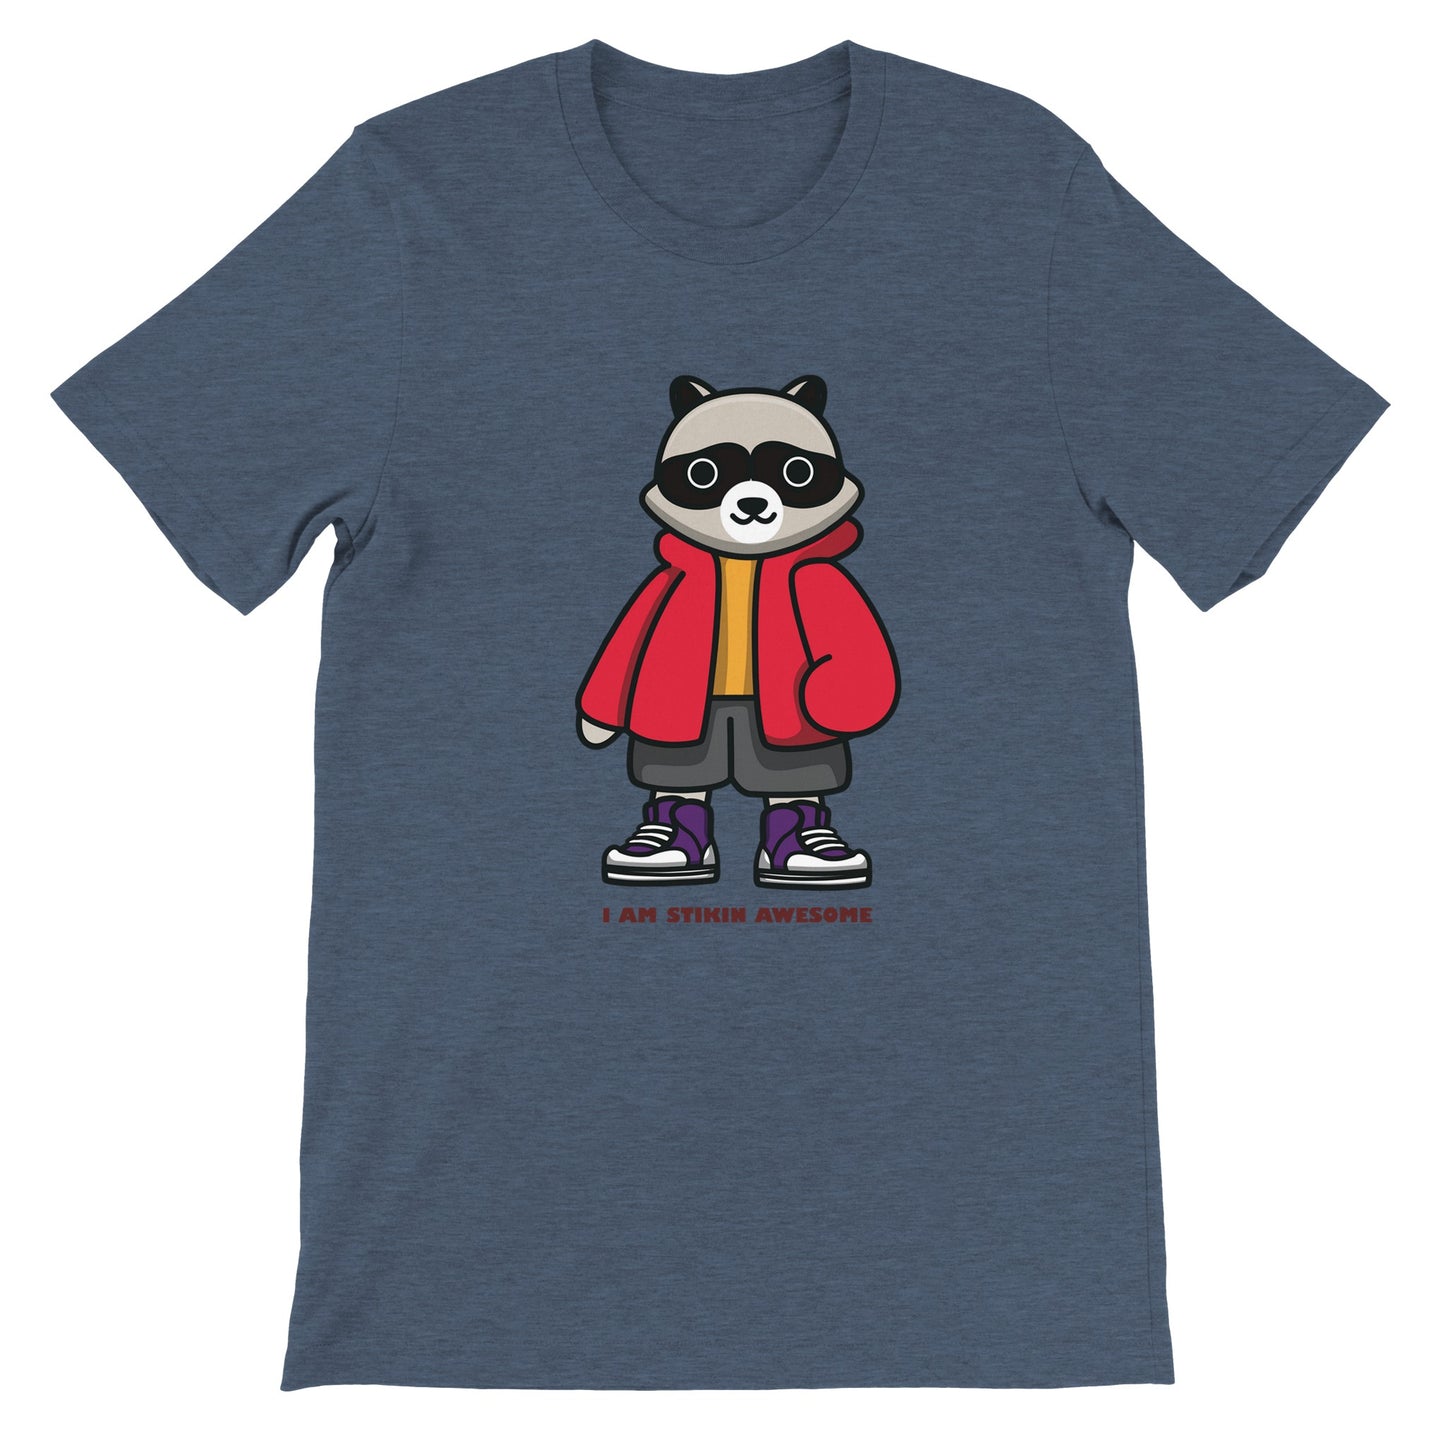 Budget Unisex Crewneck T-shirt/Skunk-Stikin-Awesome